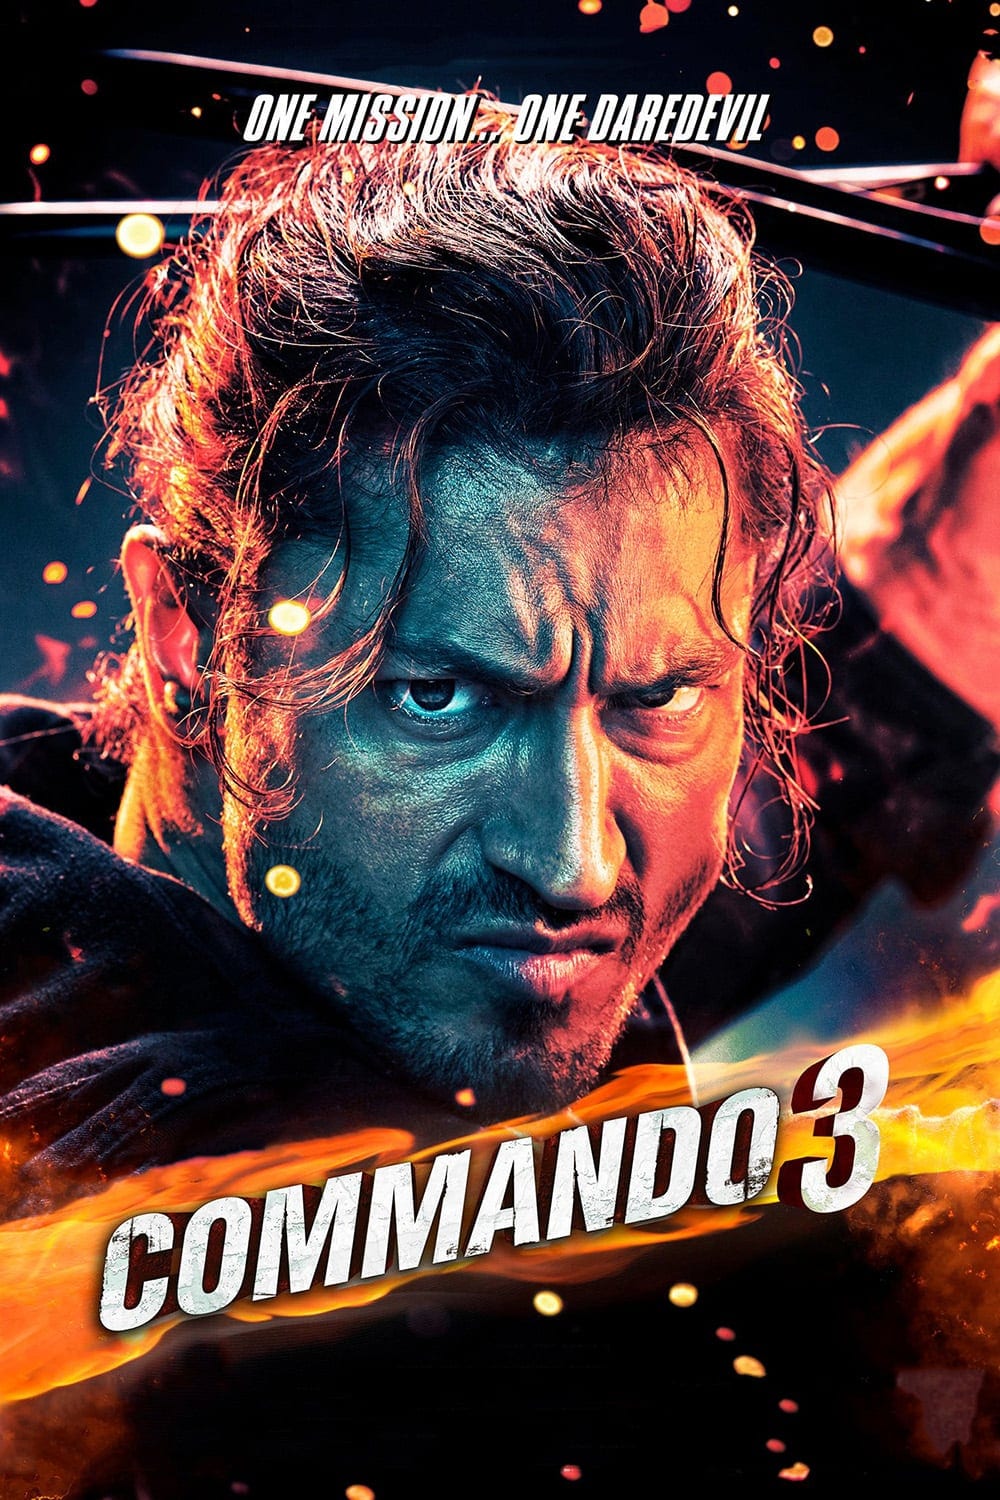 Poster for the movie "Commando 3"